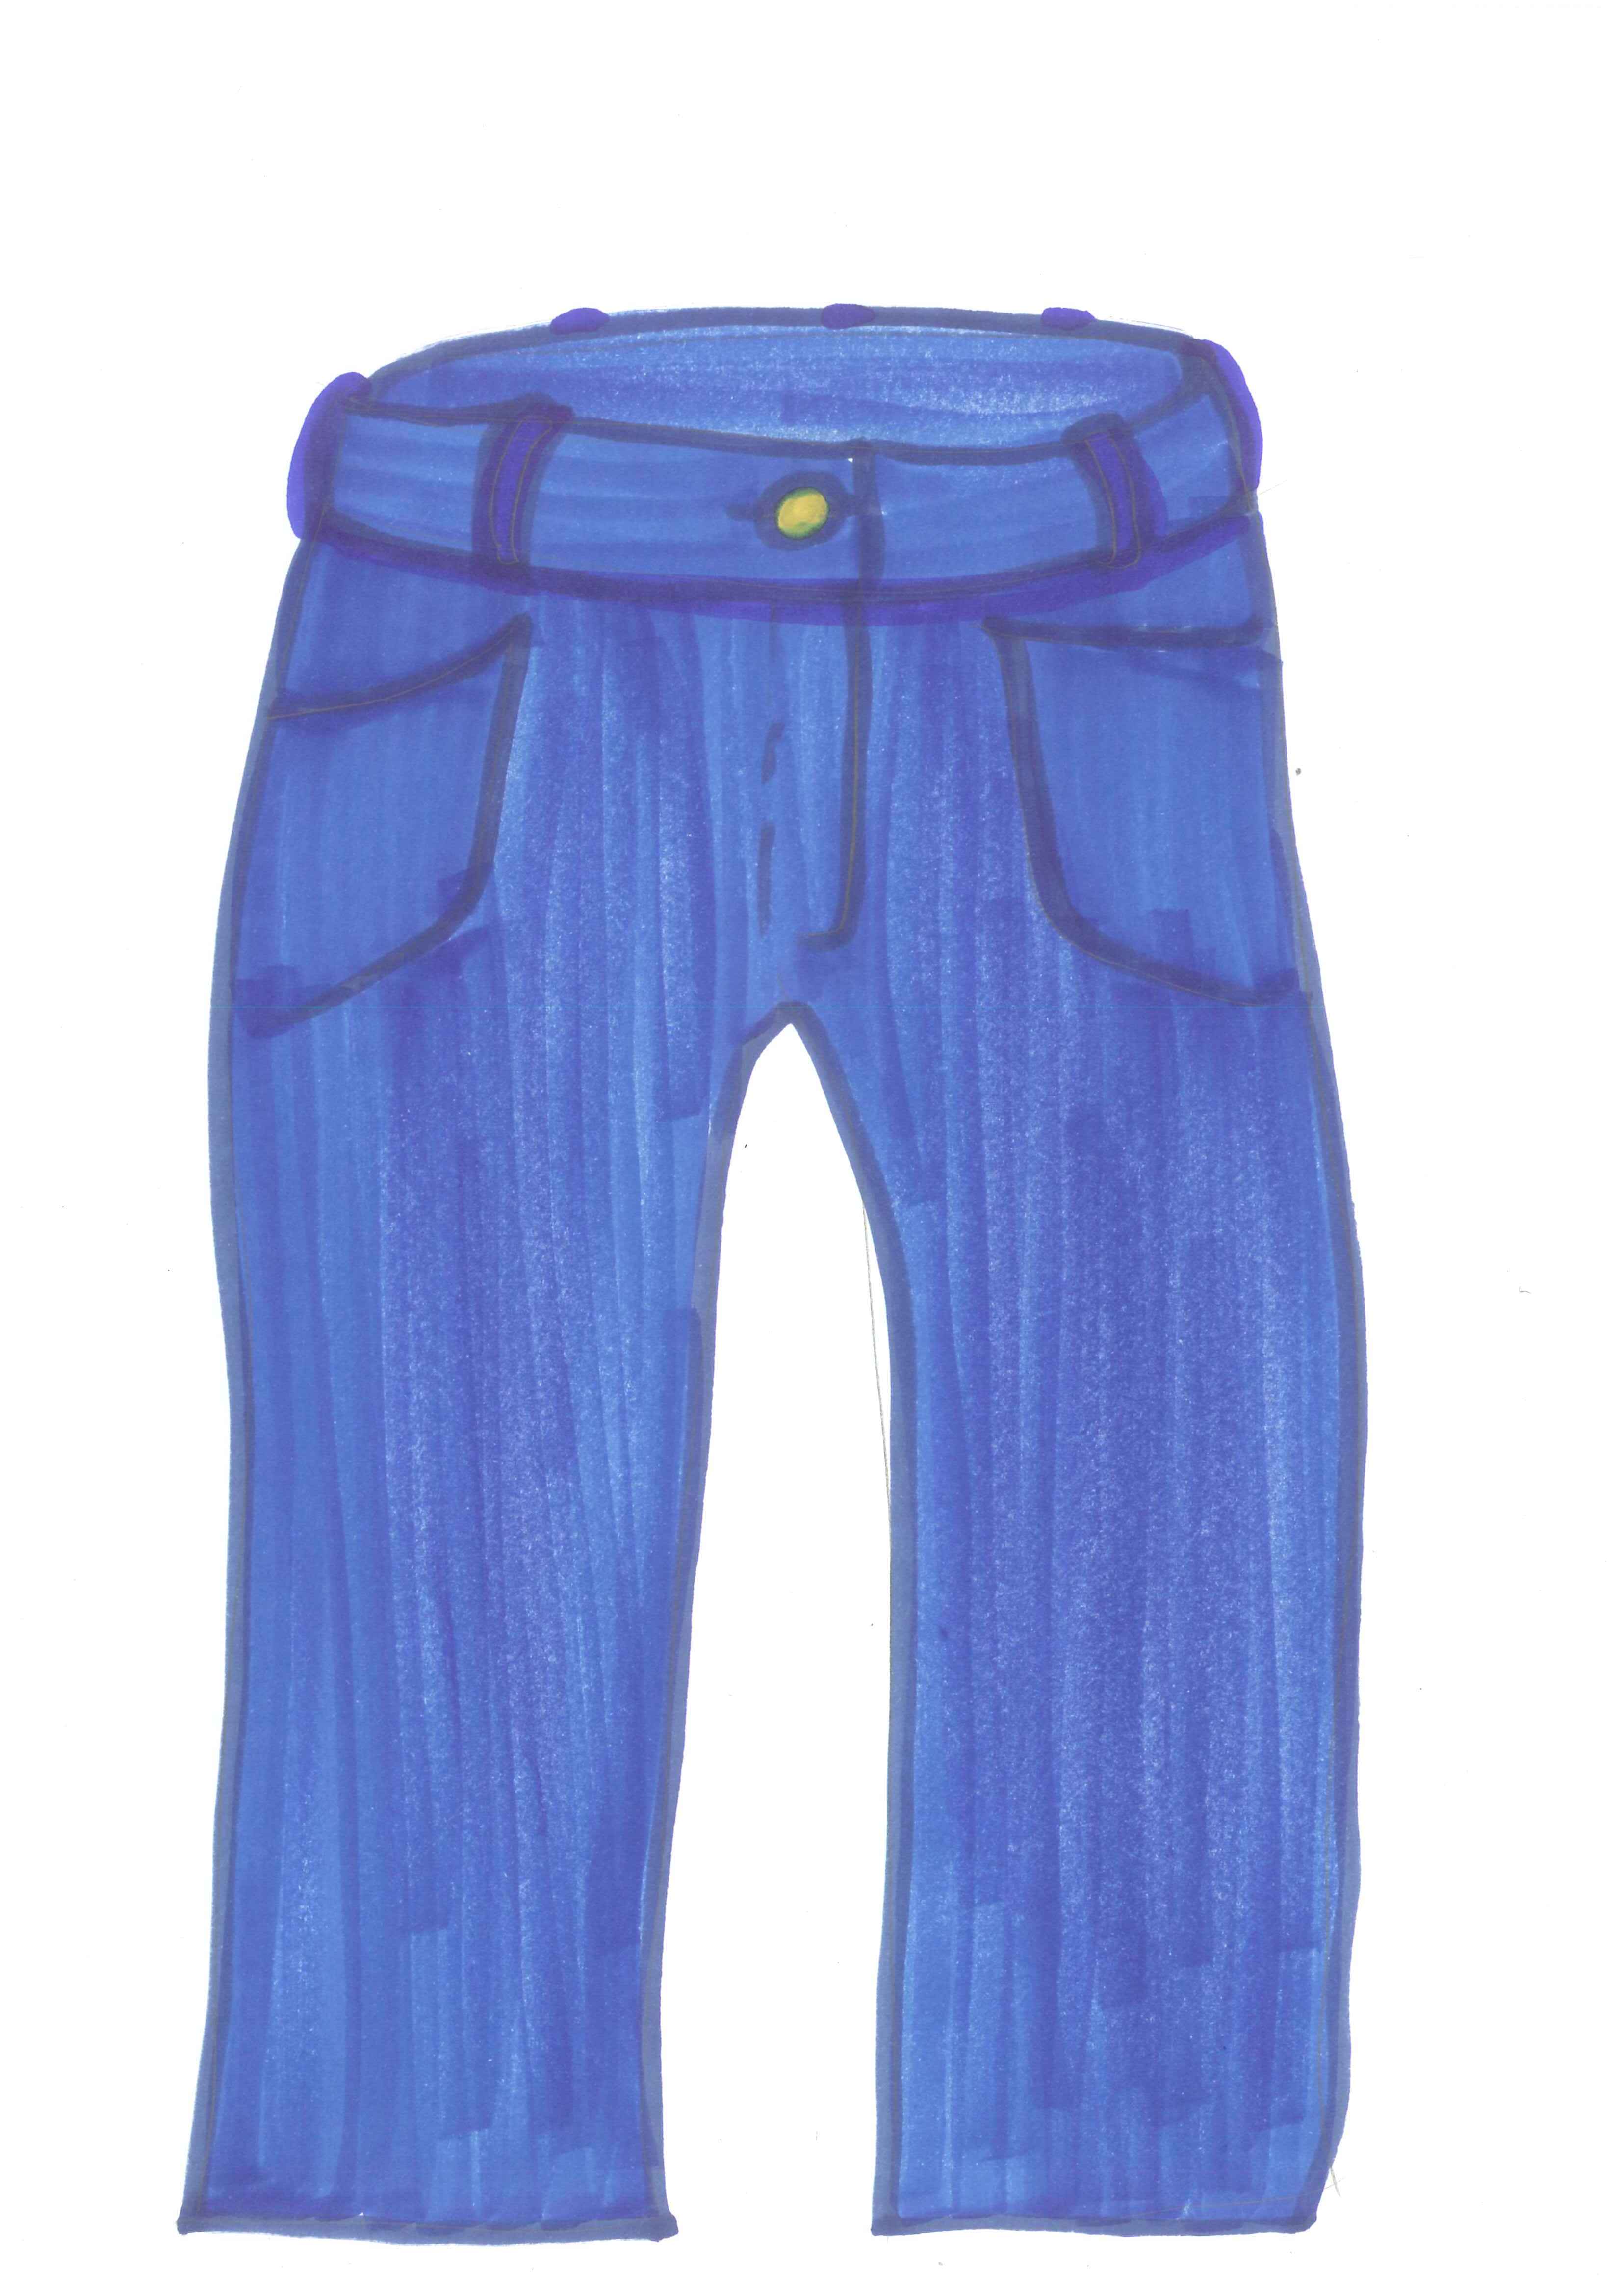 Free Blue Pants Clip Art